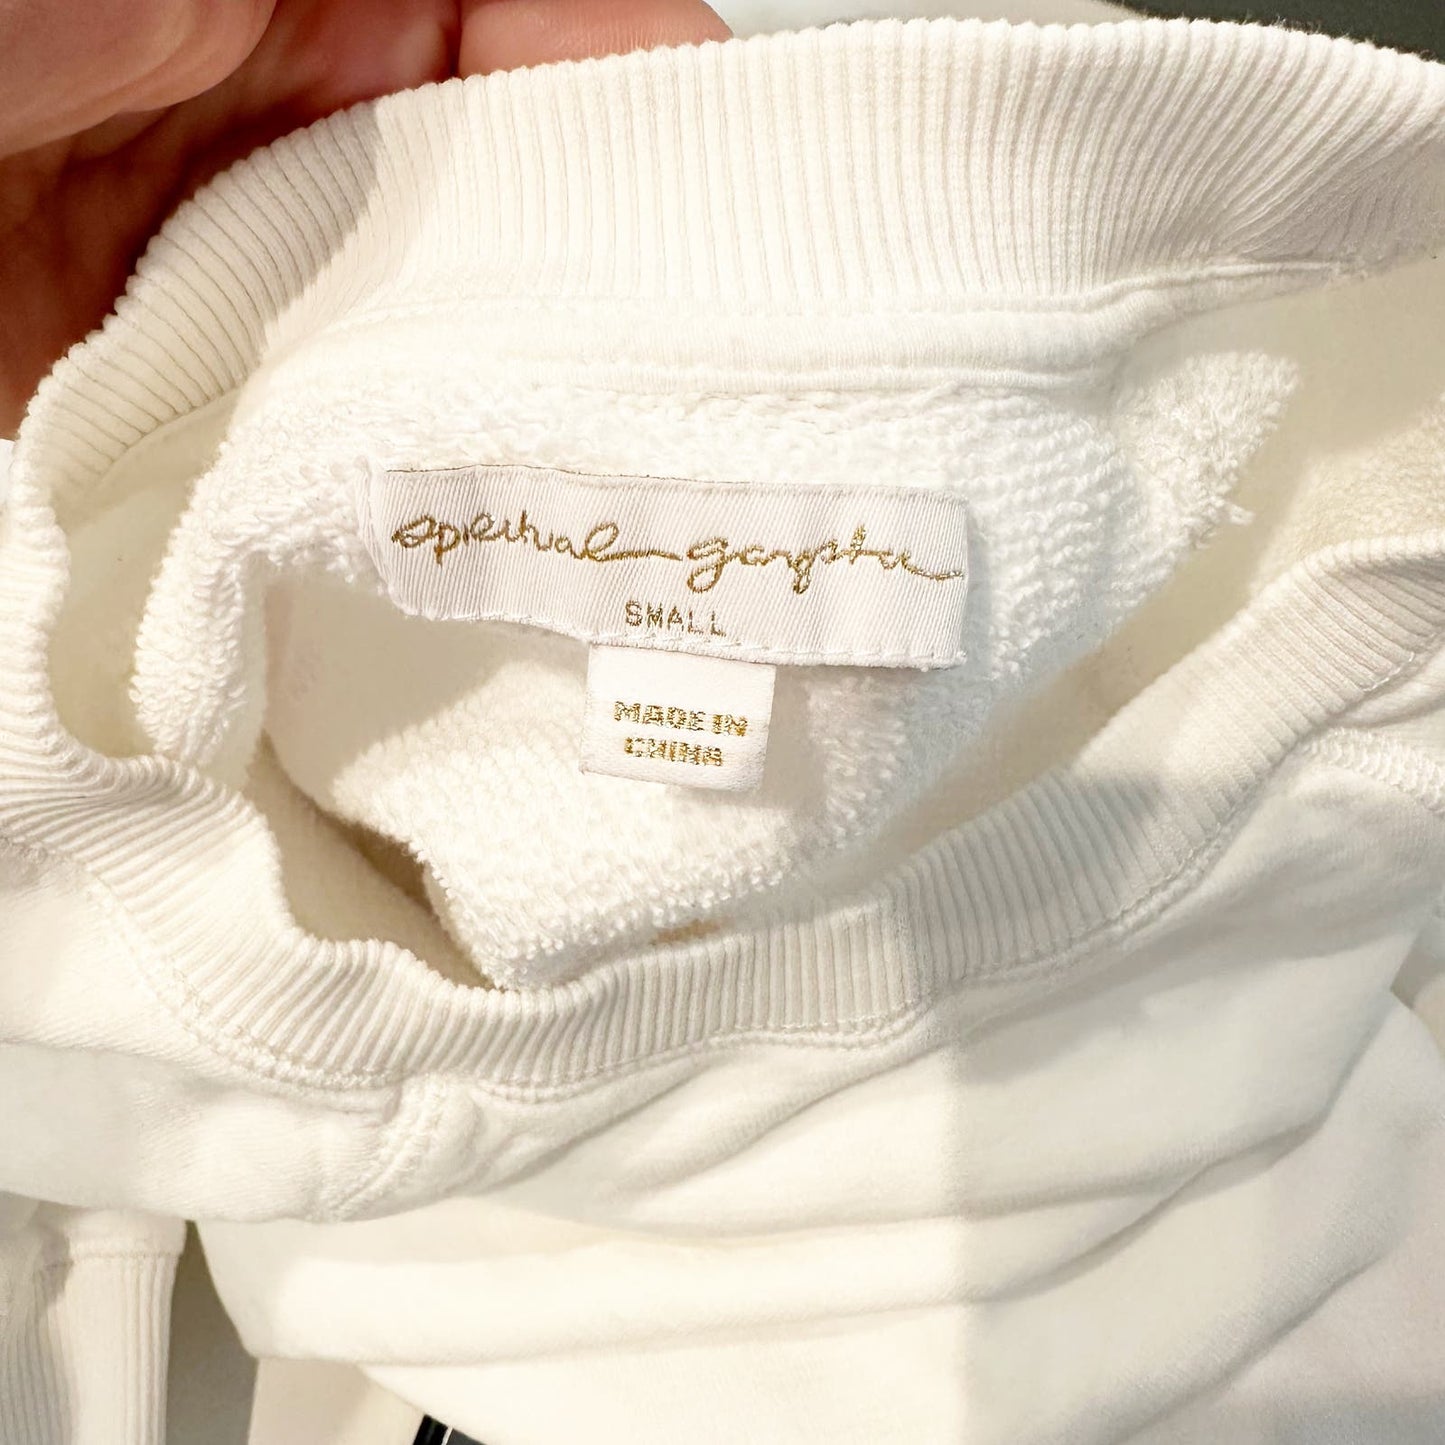 Spiritual Gangster Crewneck Pullover Cotton Love Graphic Sweatshirt White Small